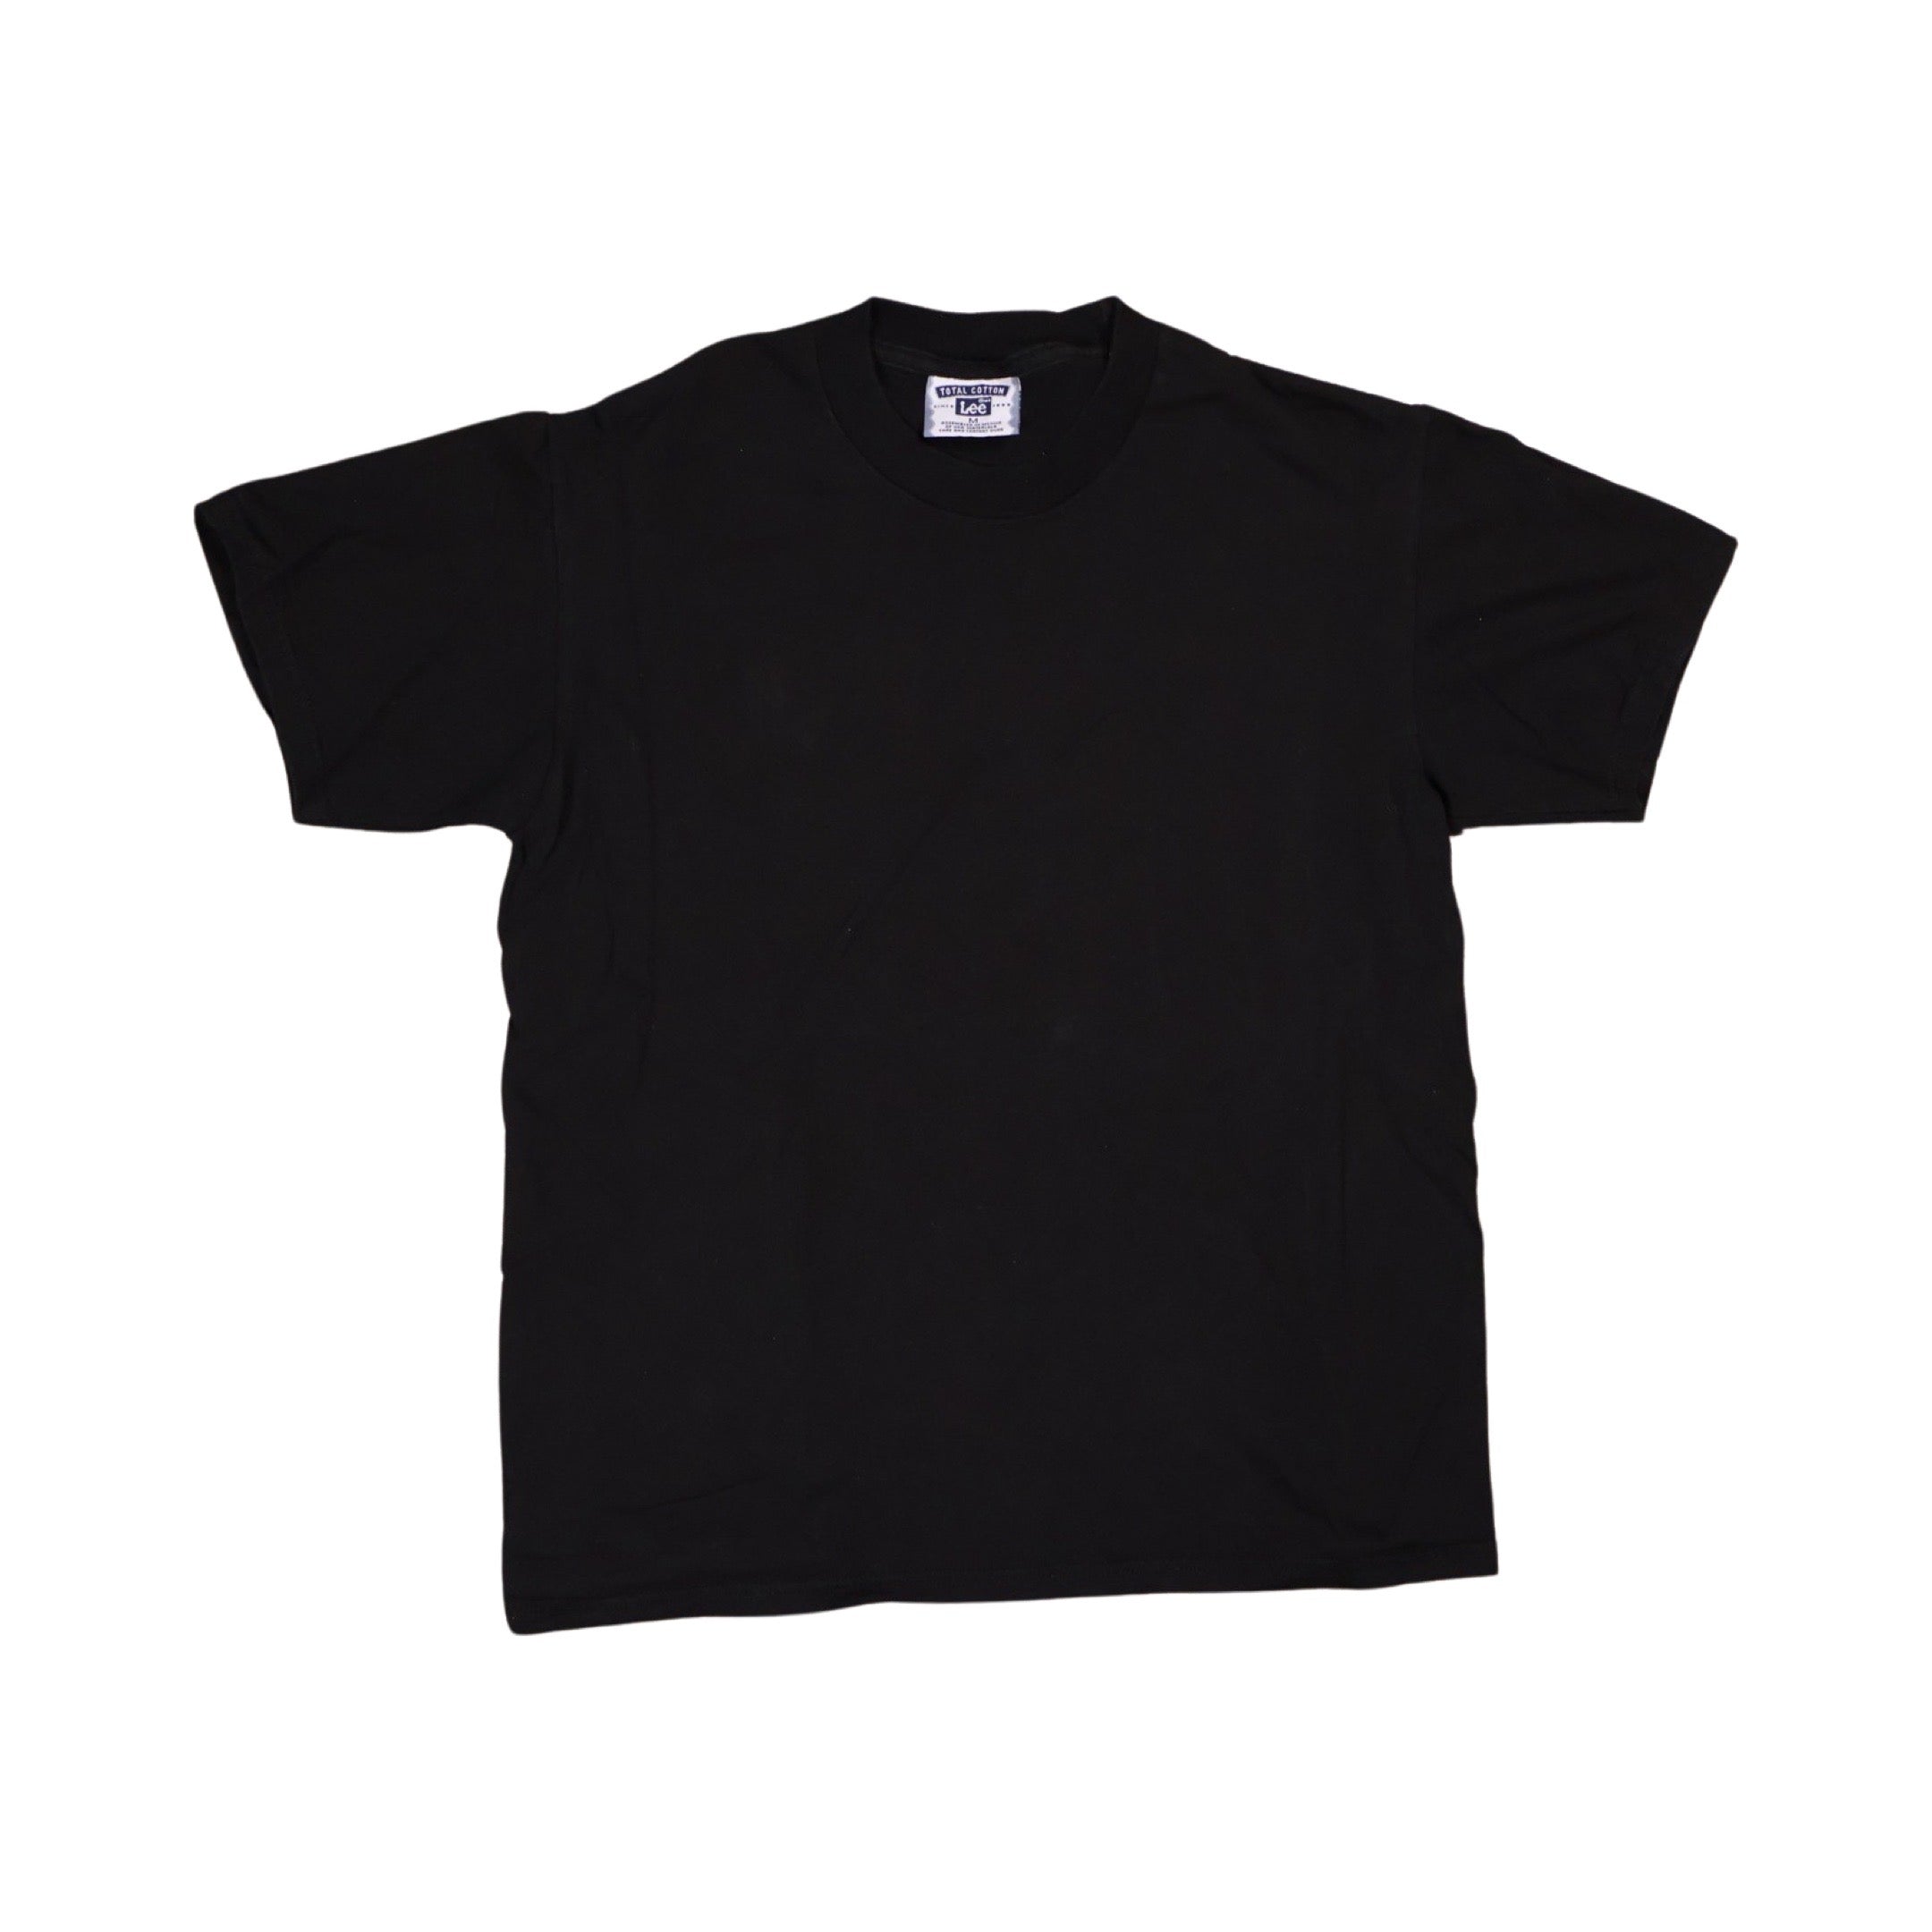 Black 90s Blank T-Shirt Essential (Medium)